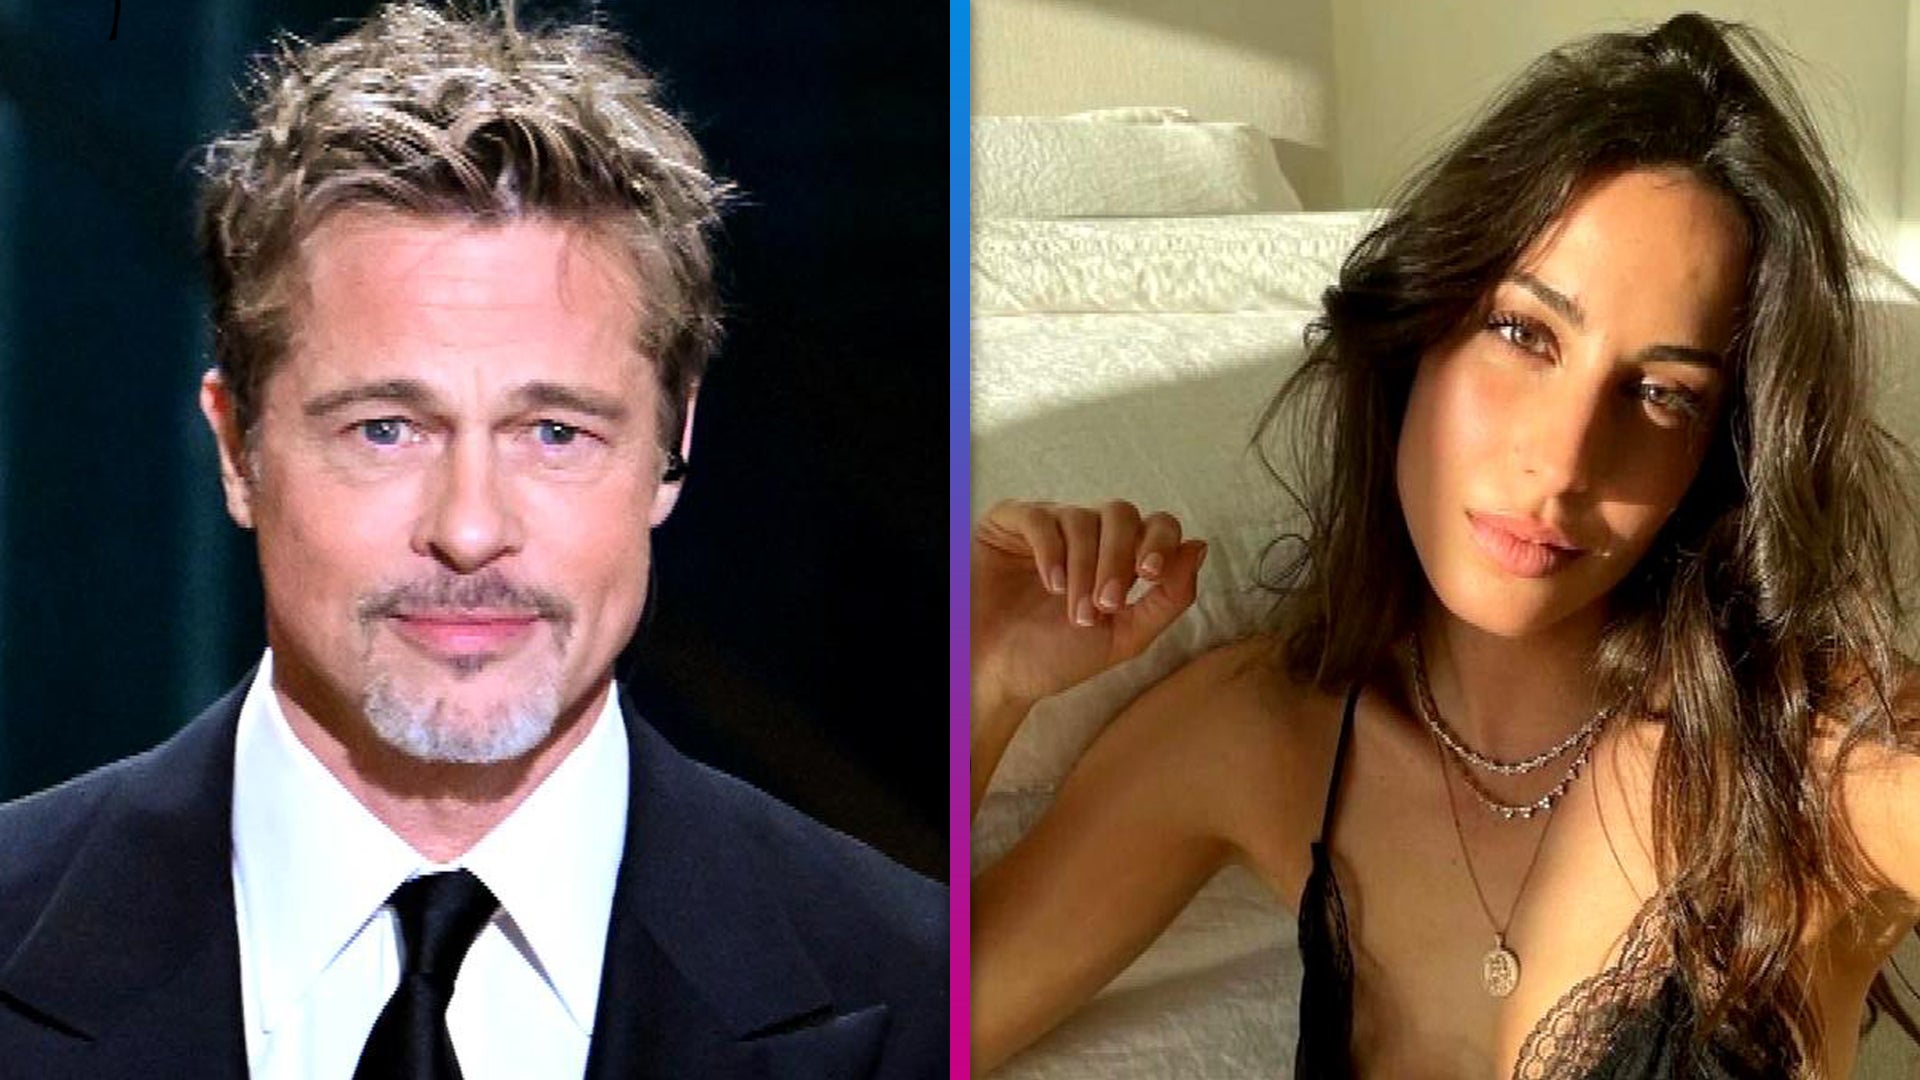 Brad Pitt's girlfriend Ines de Ramon is casual chic in a gray blazer and  jeans on errand run in LA